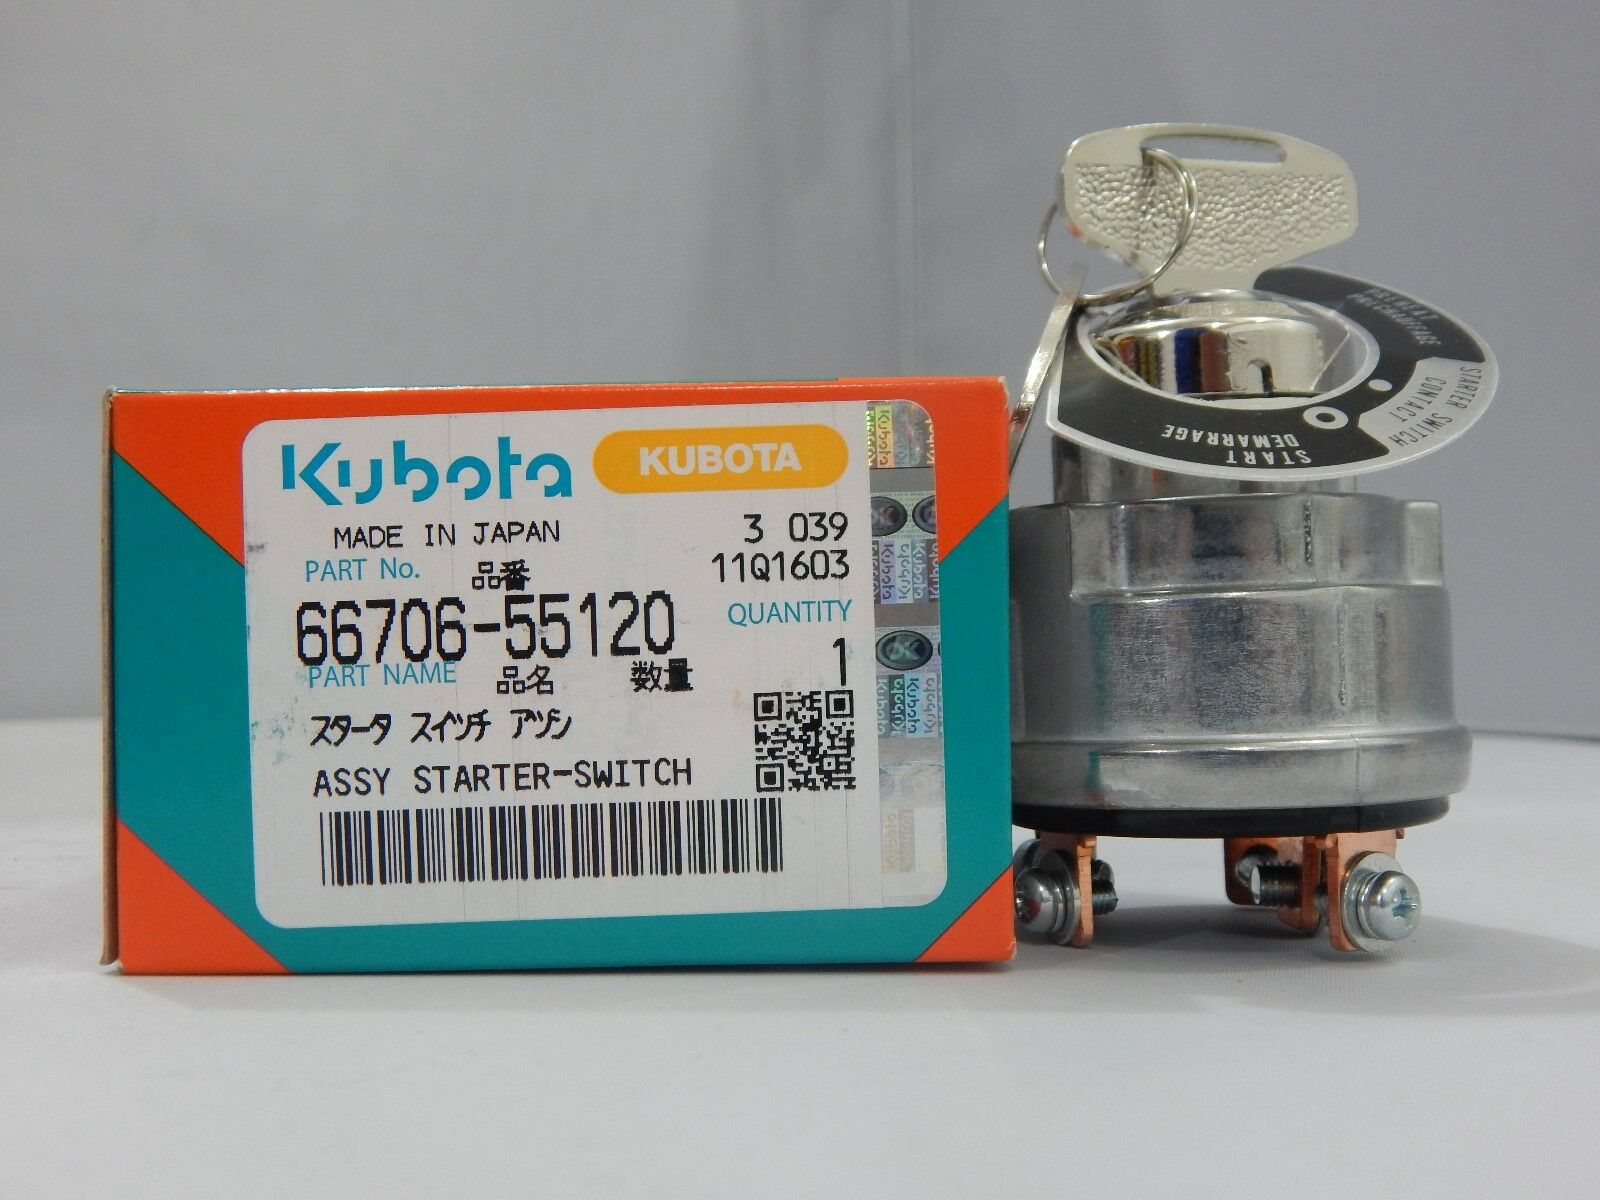 Kubota New Ignition Key Switch W Keys 66706-55120 Fits Engines And Equipment